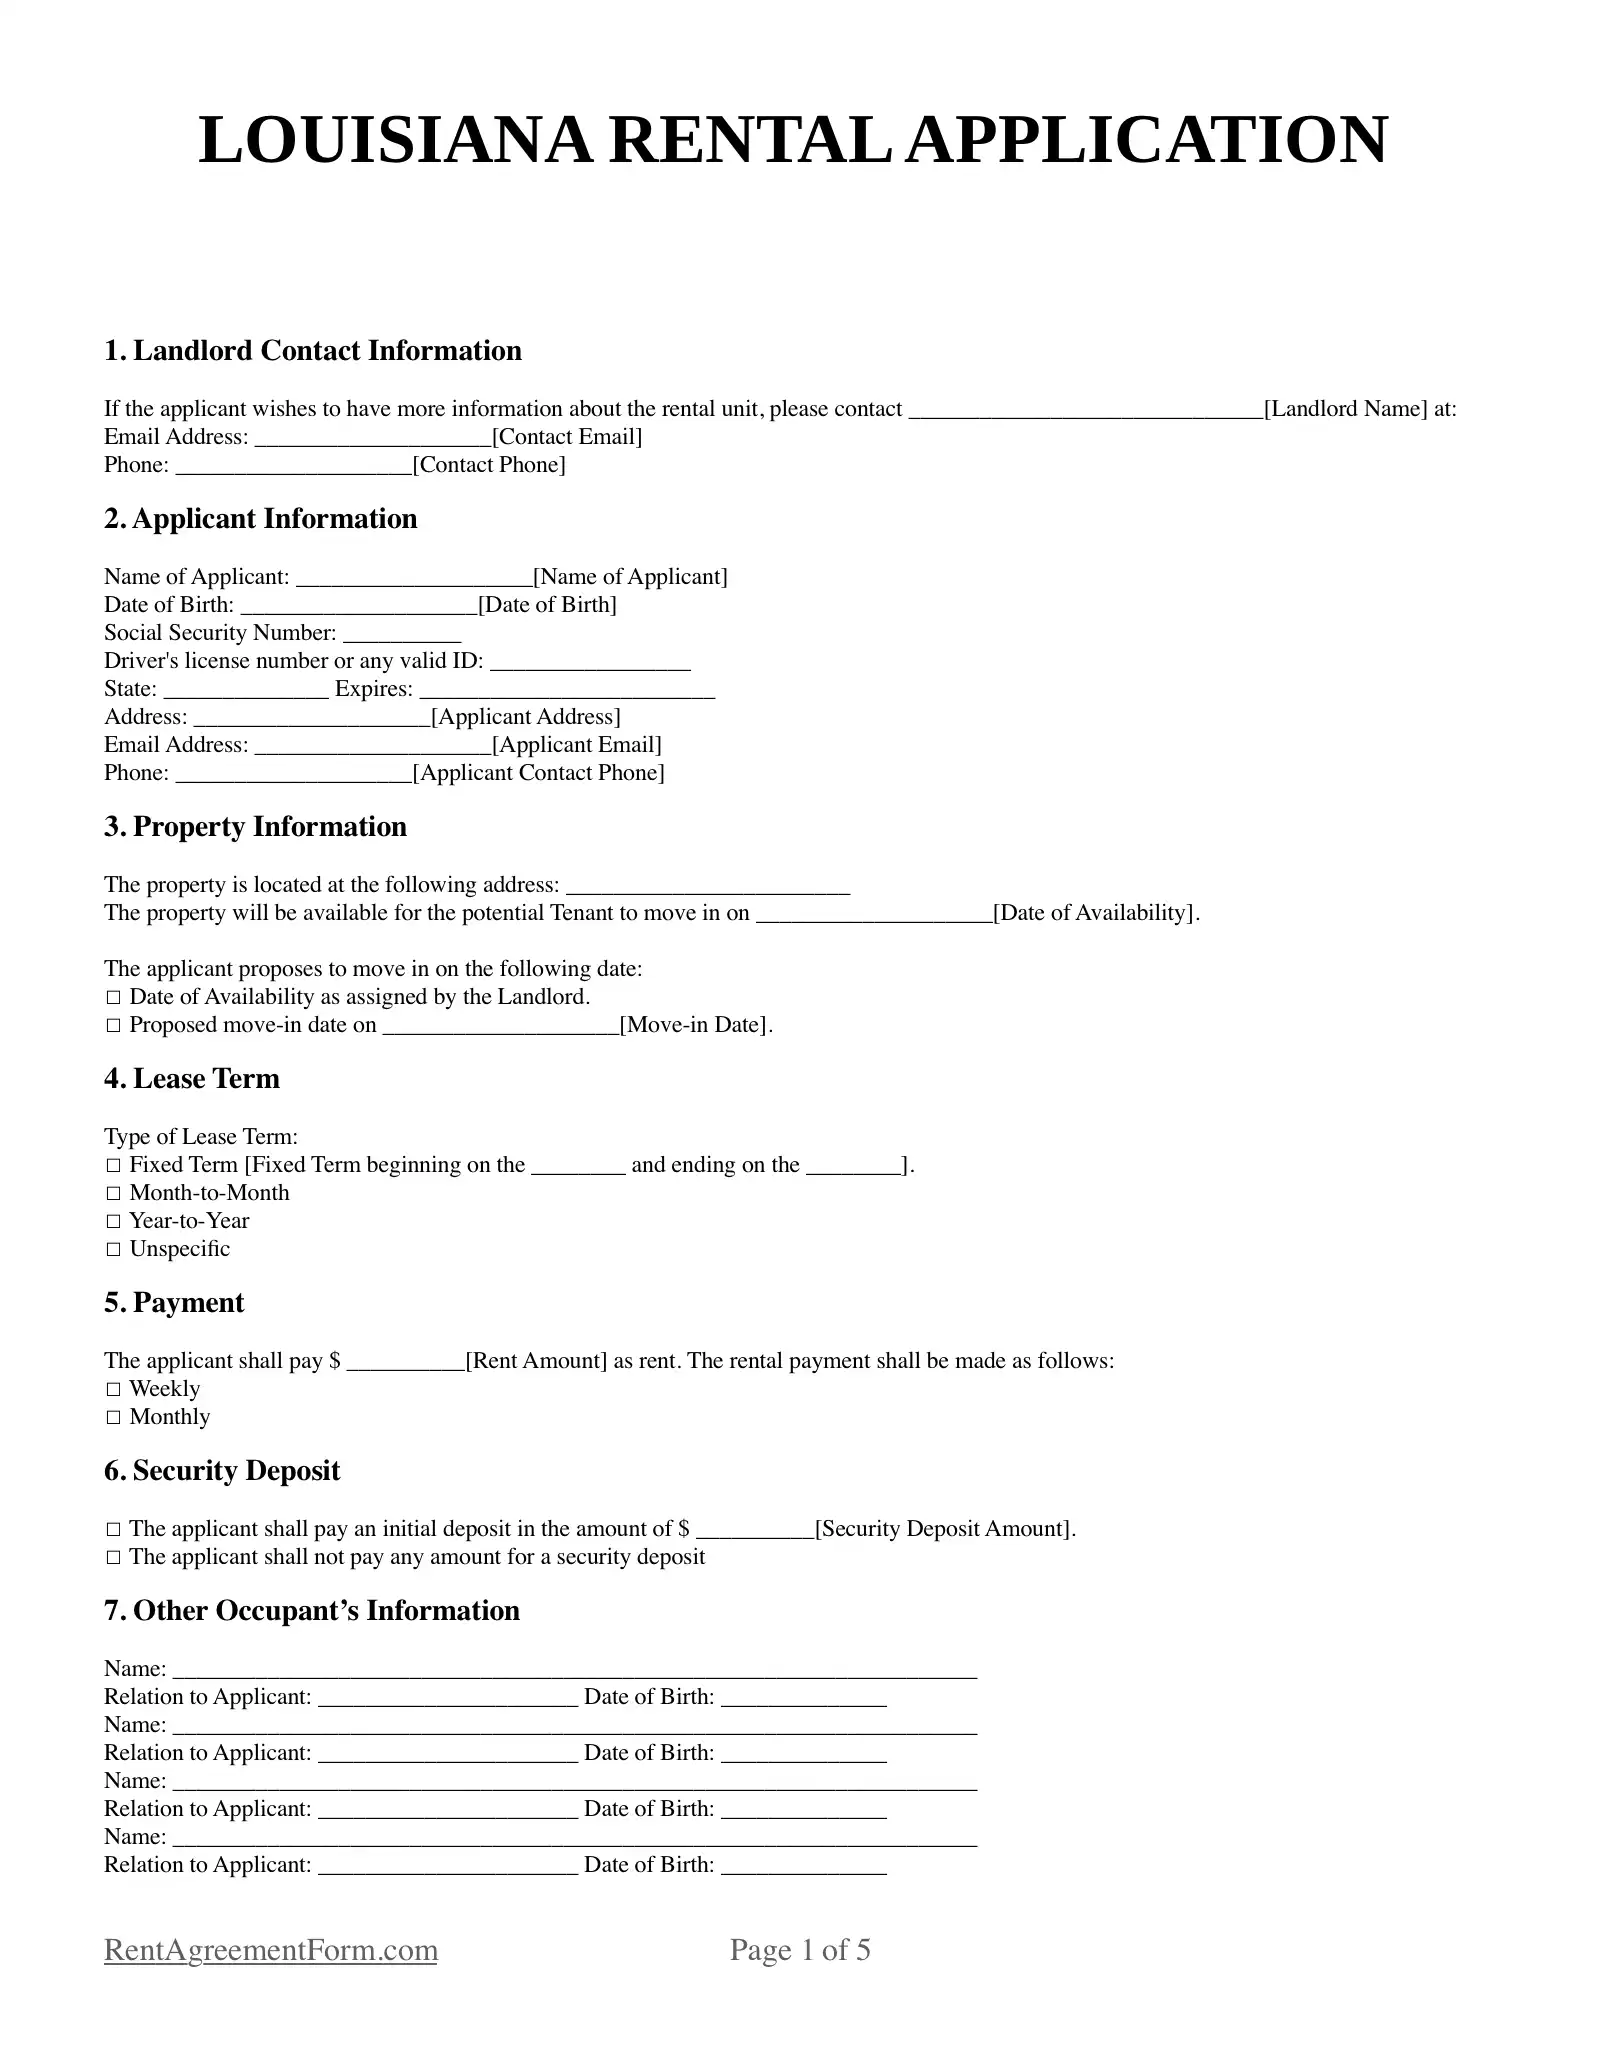 Louisiana Rental Application Sample